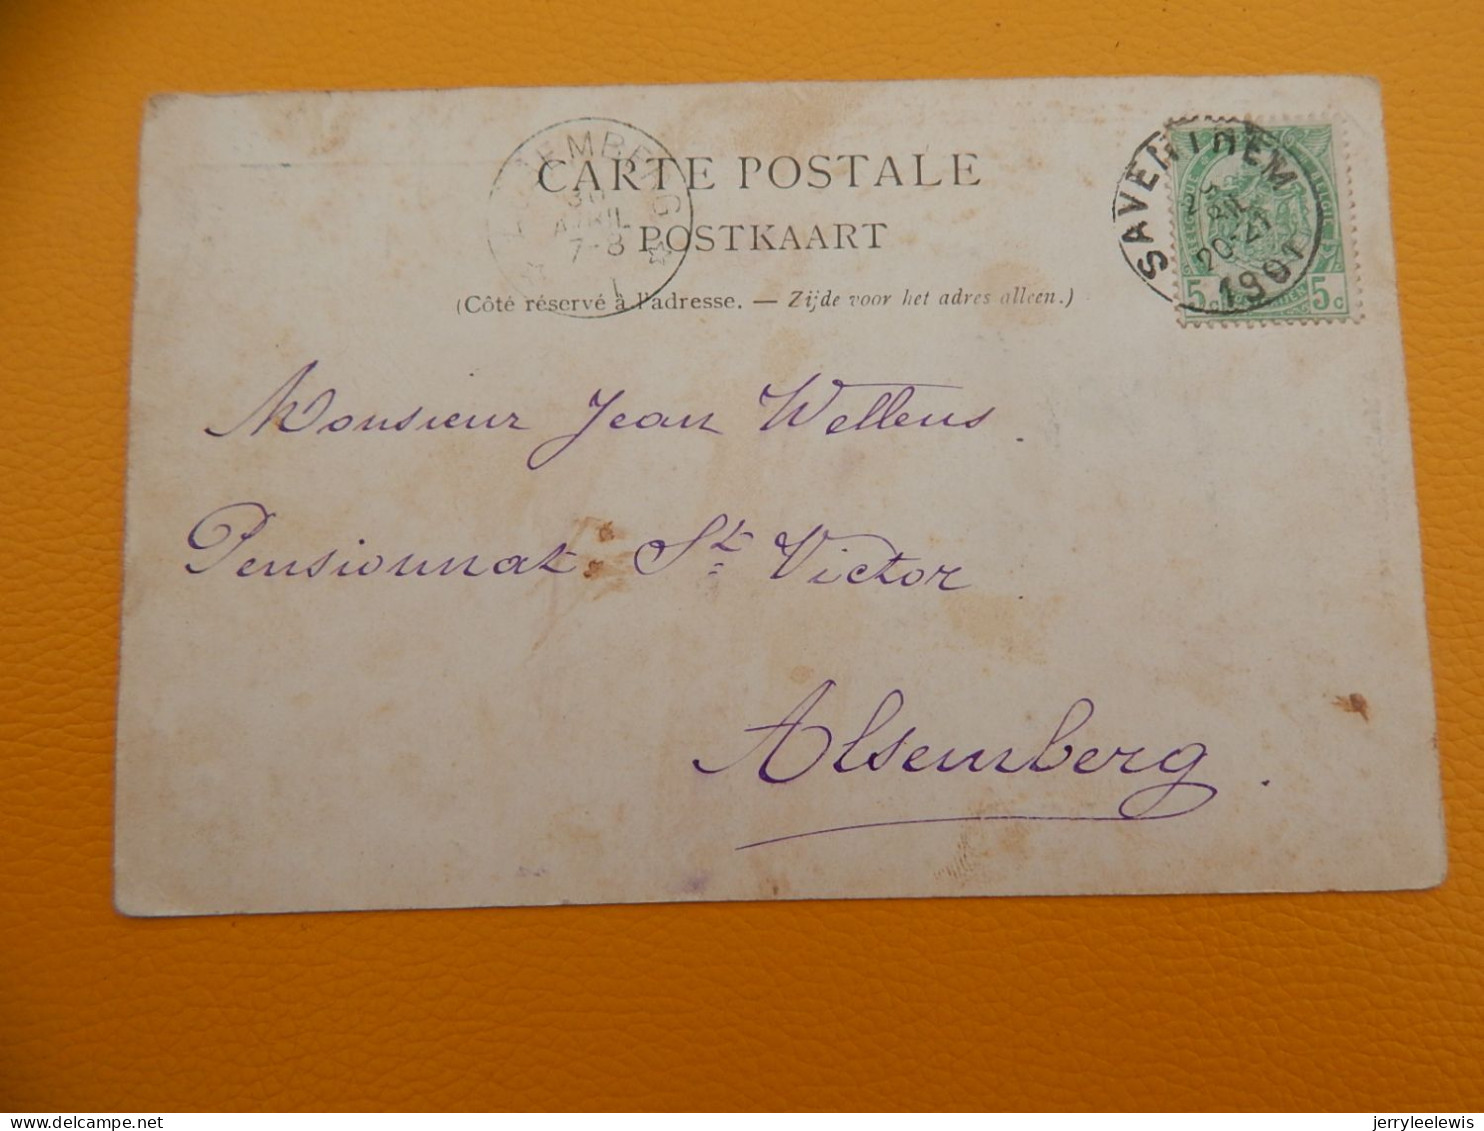 ZAVENTEM - SAVENTHEM -  Pensionnaat Der Ursulinen, Kapel  - Pensionnat Des Ursulines , Chapelle  -  1901 - Zaventem